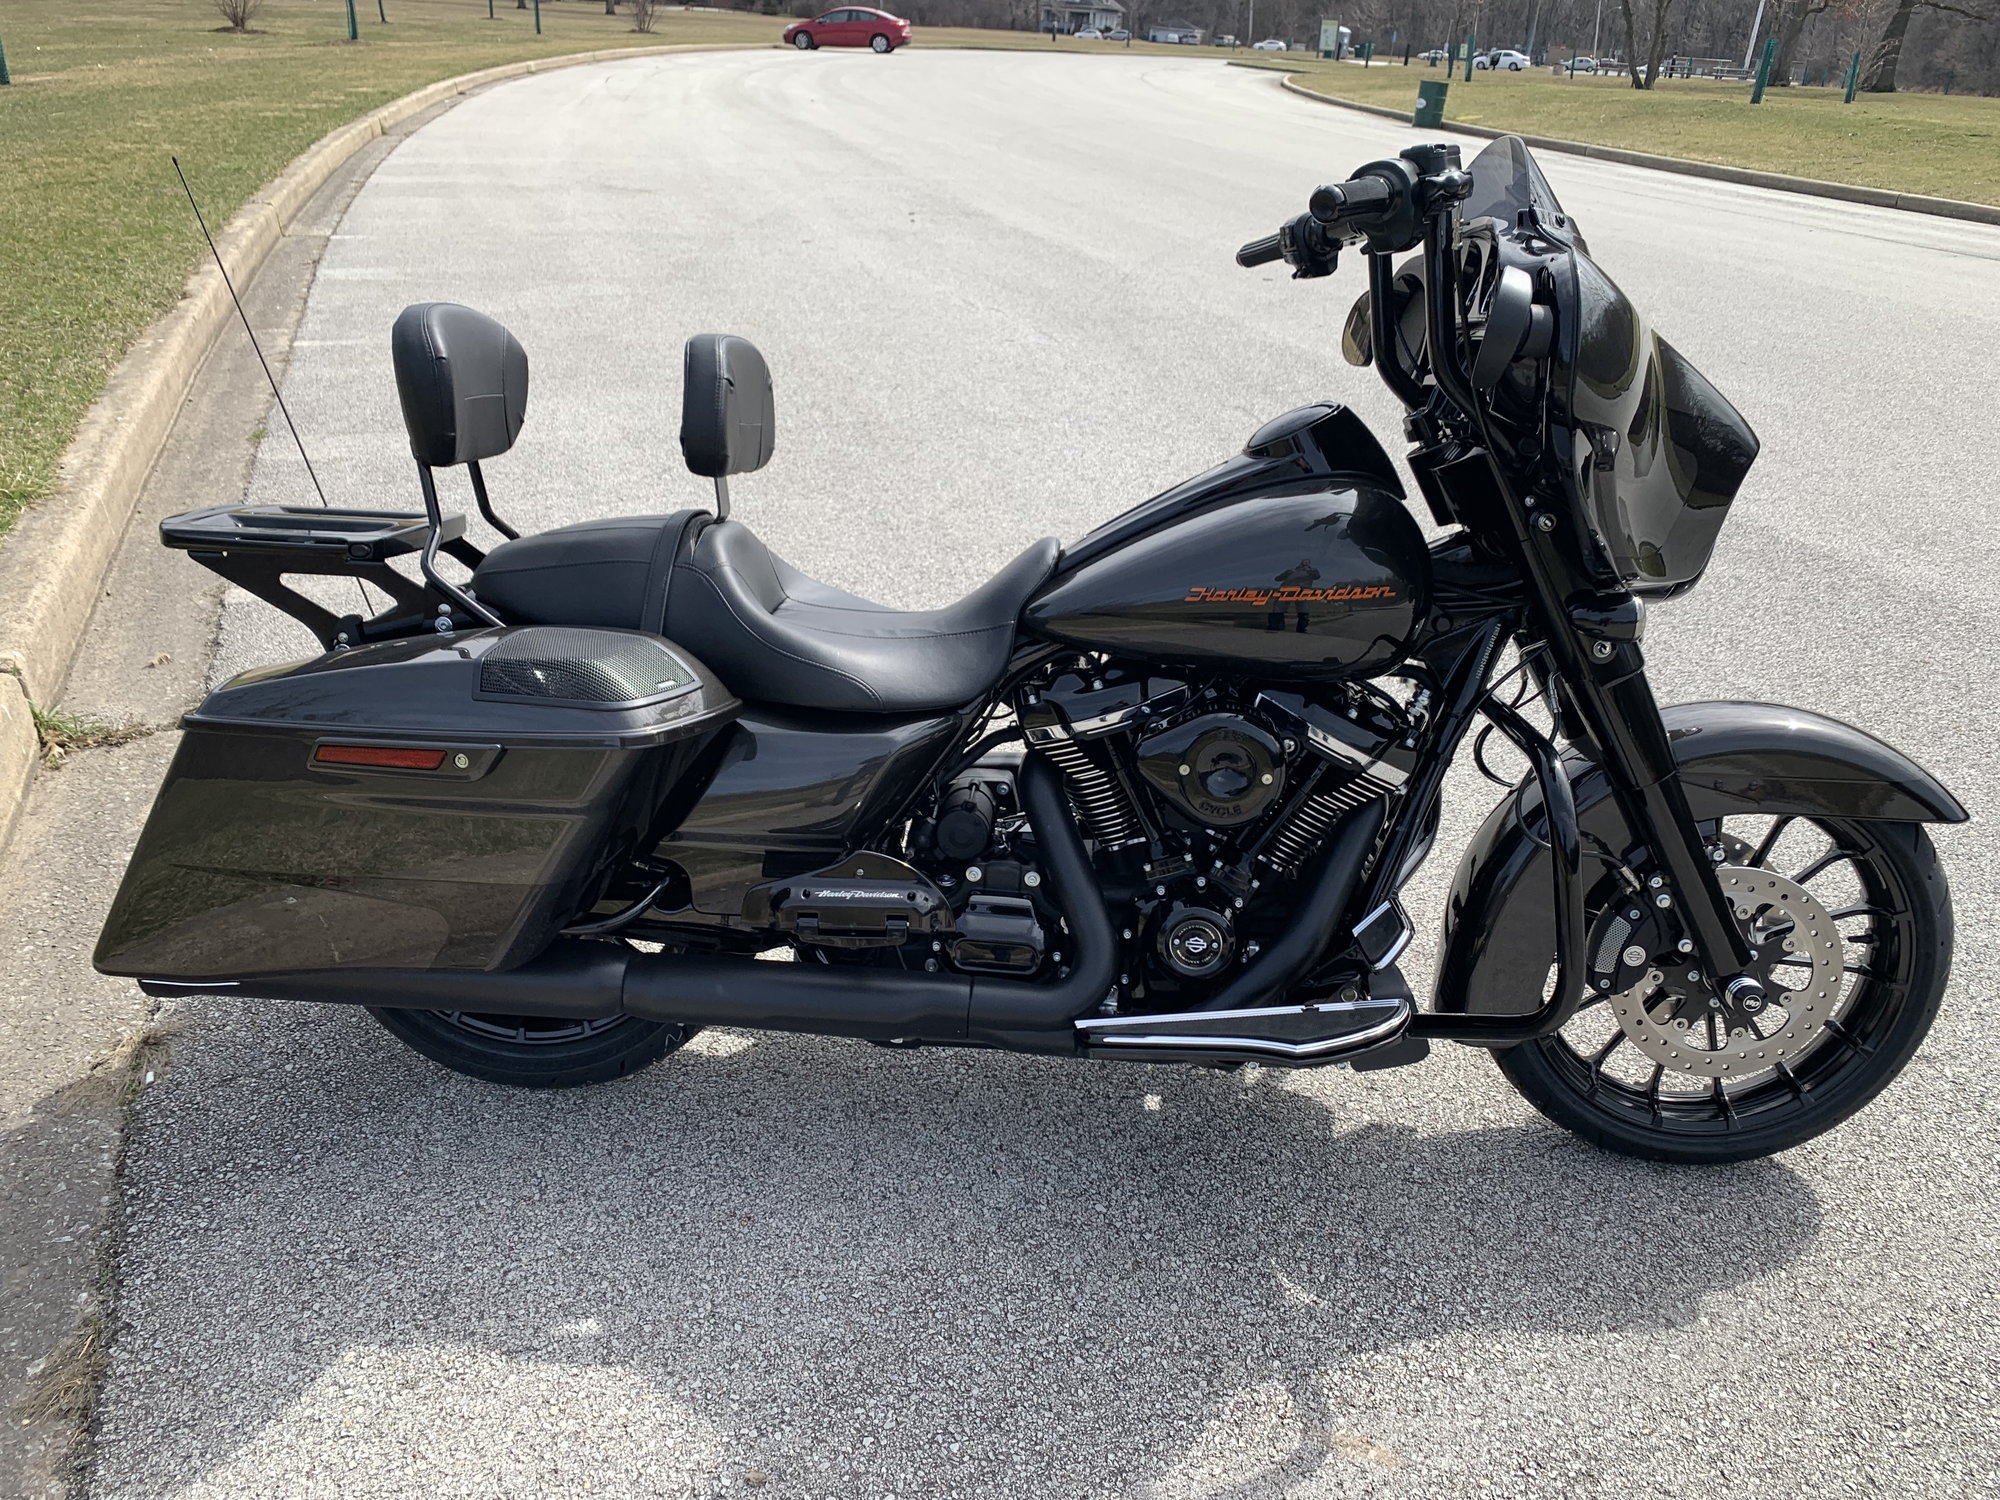 New Ride 2019 Sgs Silver Flux Black Fuse Harley Davidson Forums